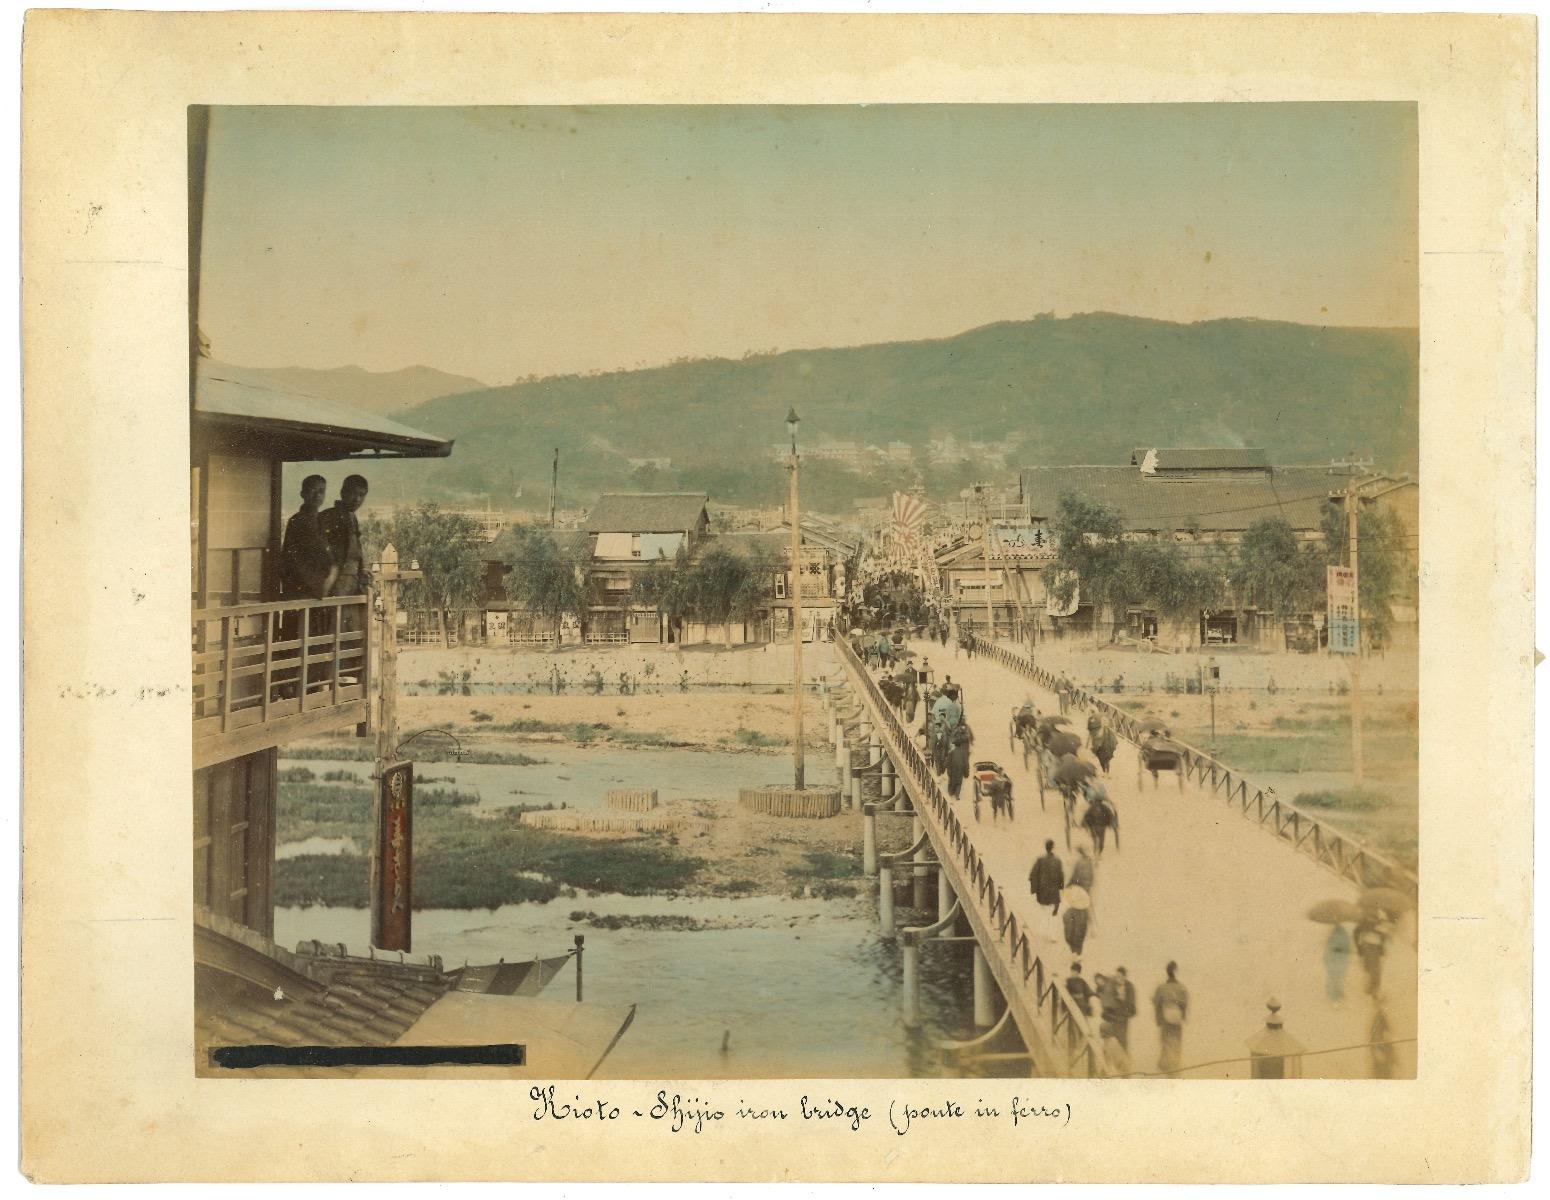 Unknown Figurative Photograph - Ancient view of Kyoto, Shinjio Iron Bridge - Original Albumen Print - 1880s/90s